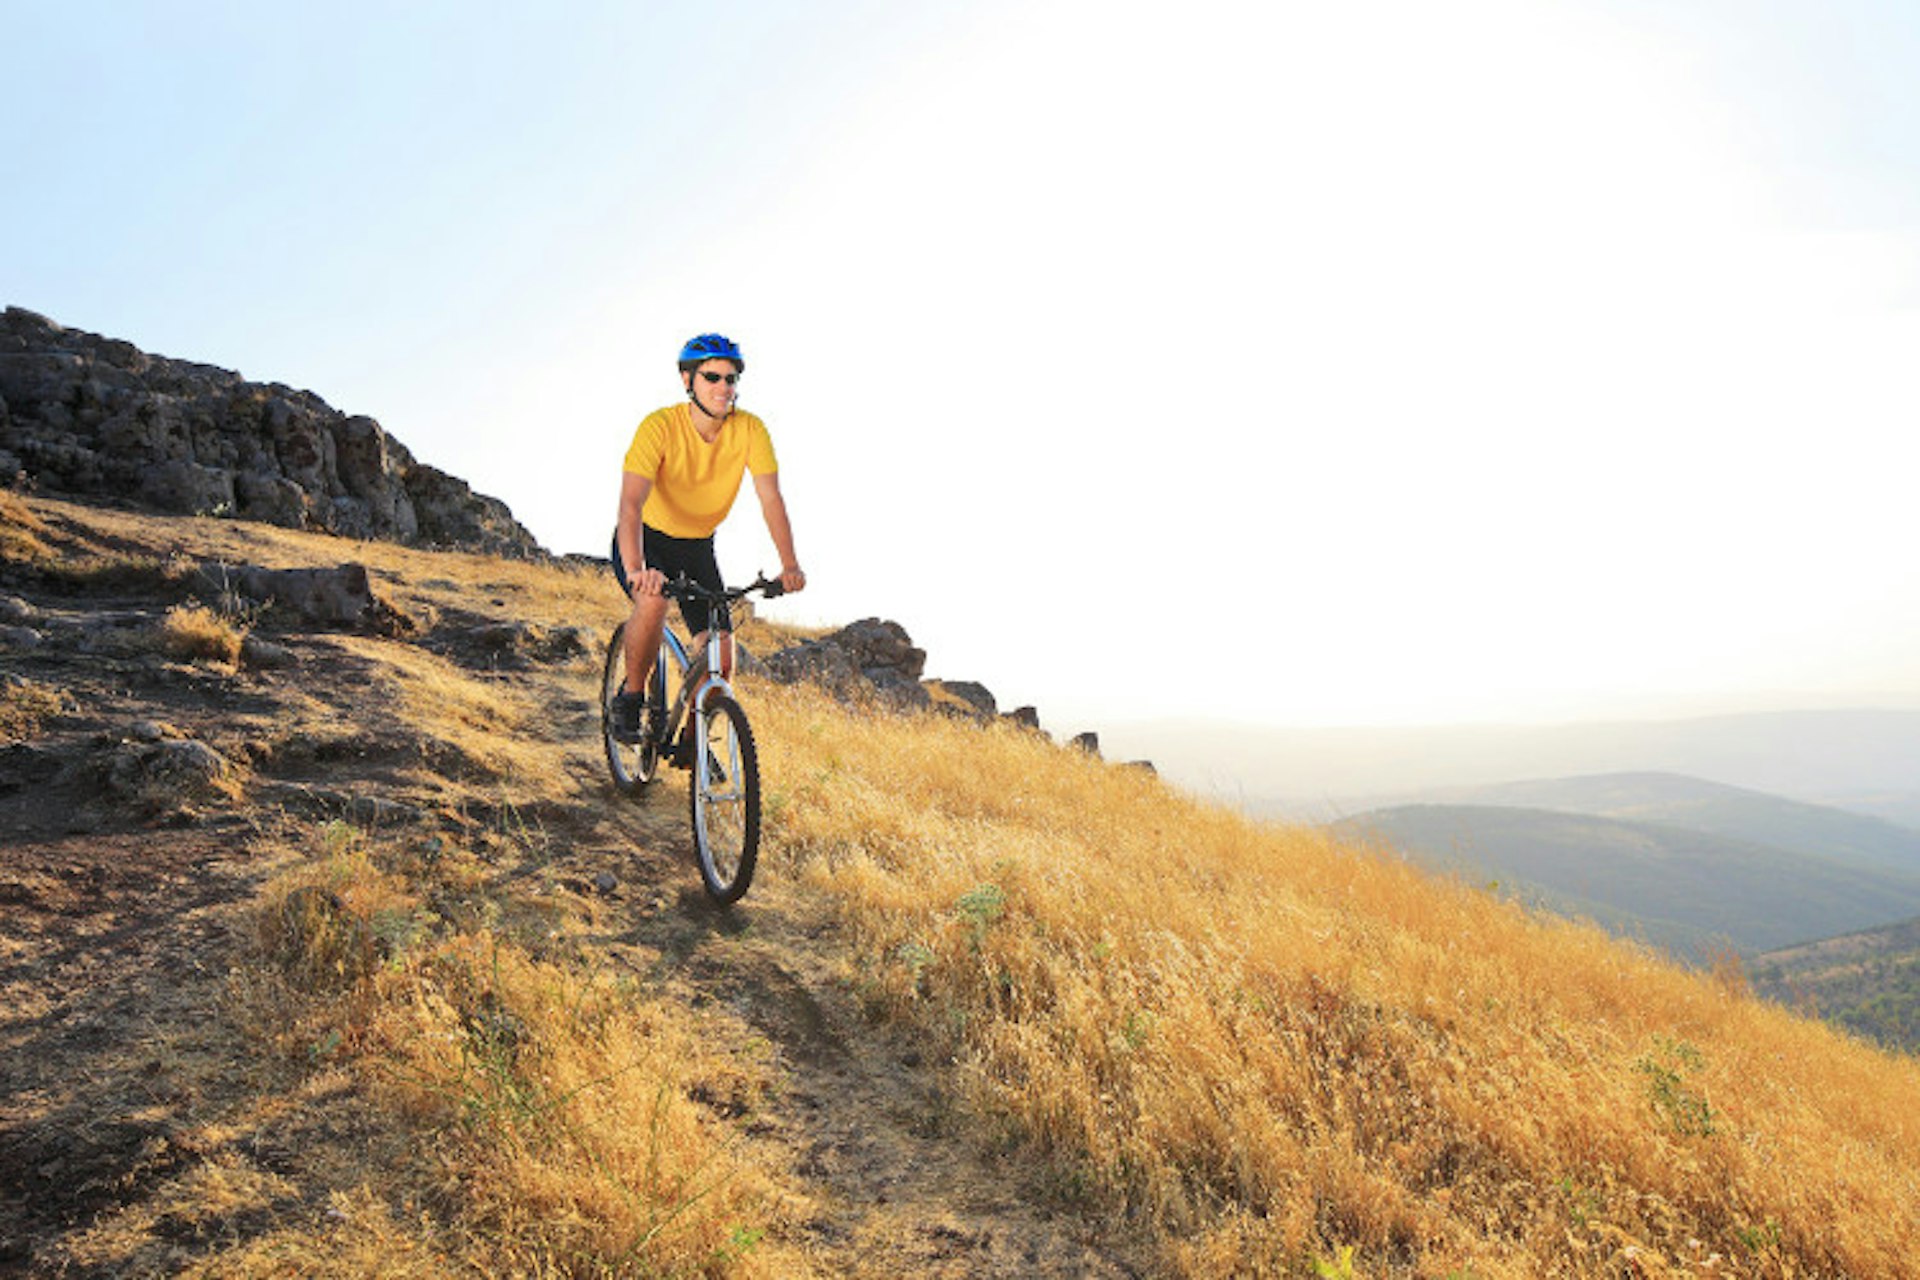 Jasen nature reserve is great for mountain biking © Ljupco Smokovski / Shutterstock